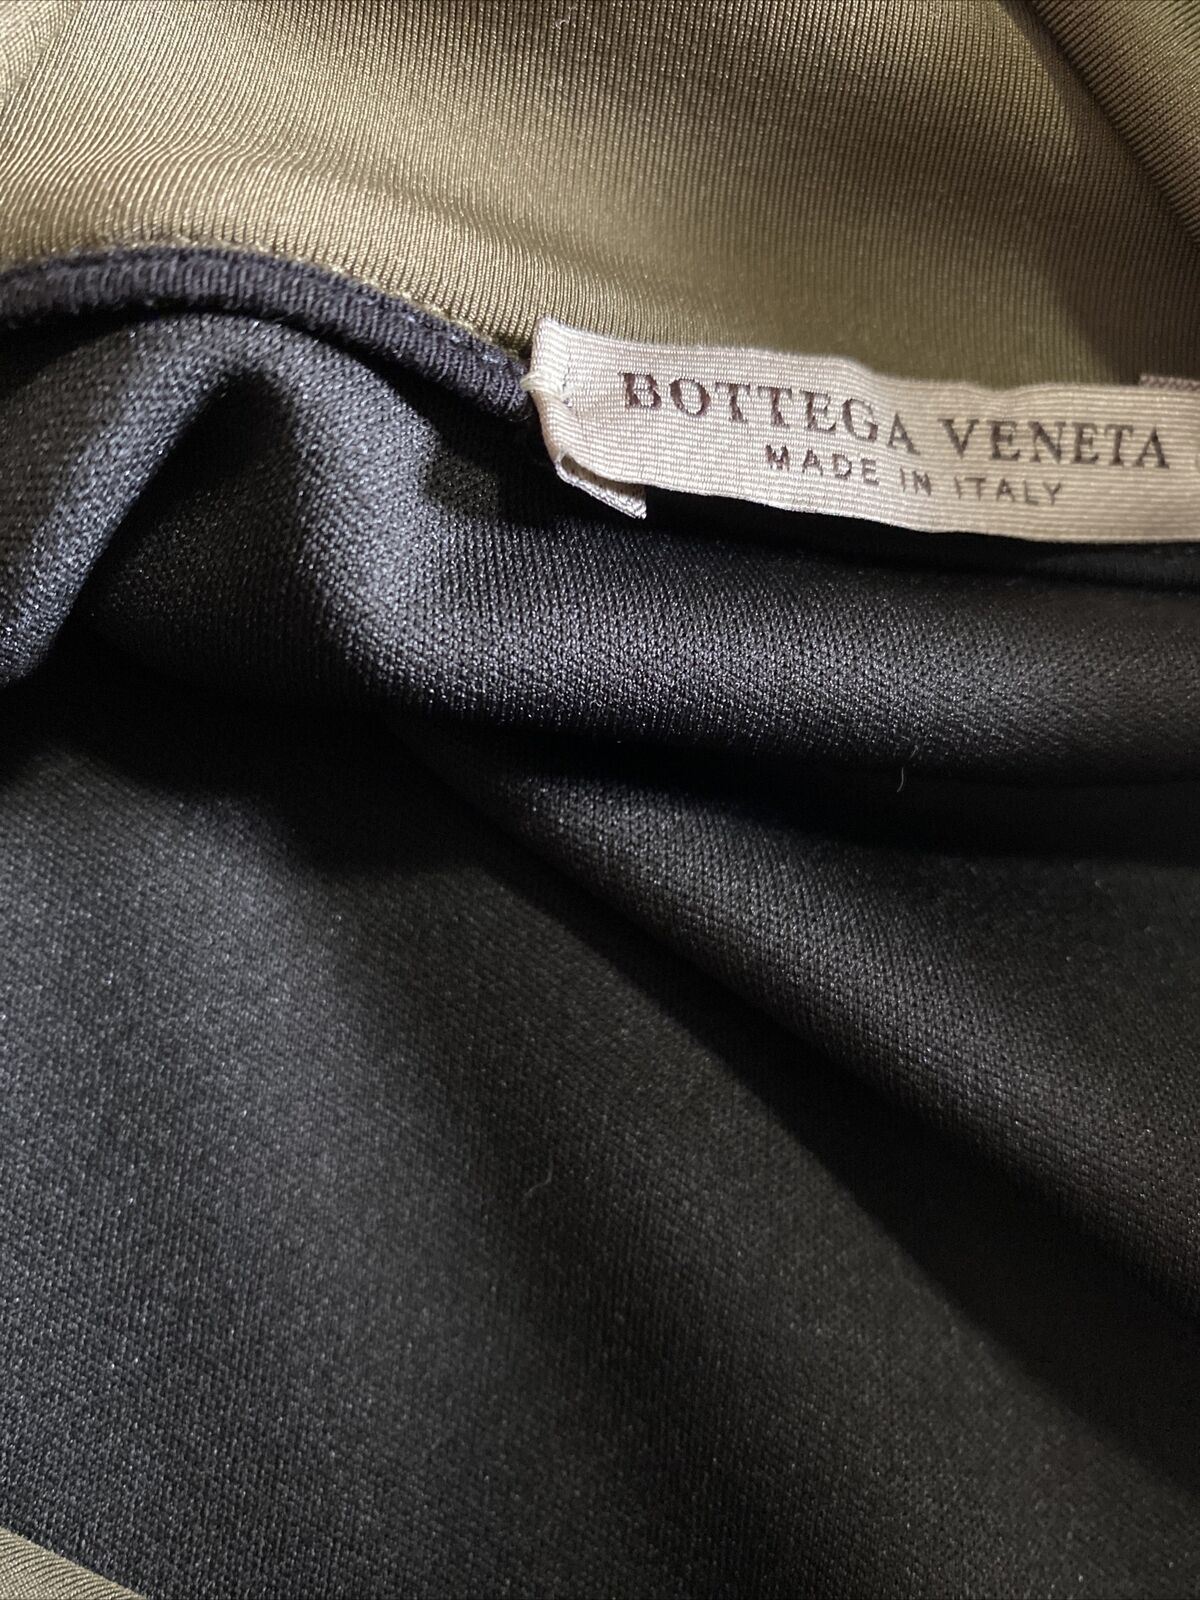 NWT $820 Bottega Veneta Мужской пуловер из трикотажа коричневого цвета 36 США/46 ЕС